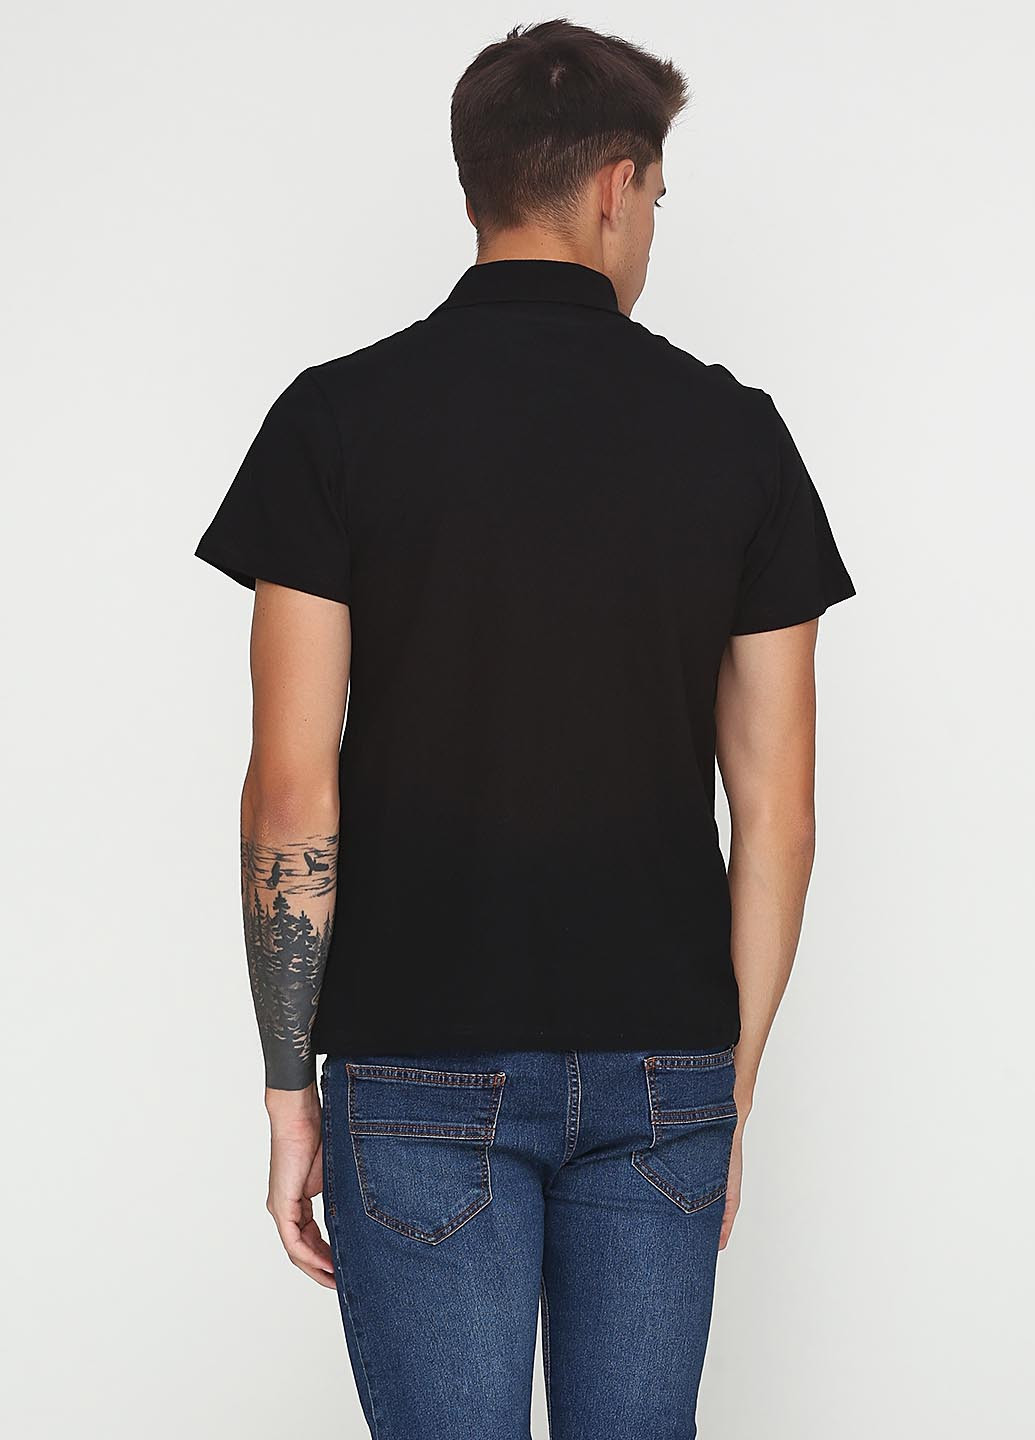 Черная футболка-поло для мужчин Tryapos однотонная